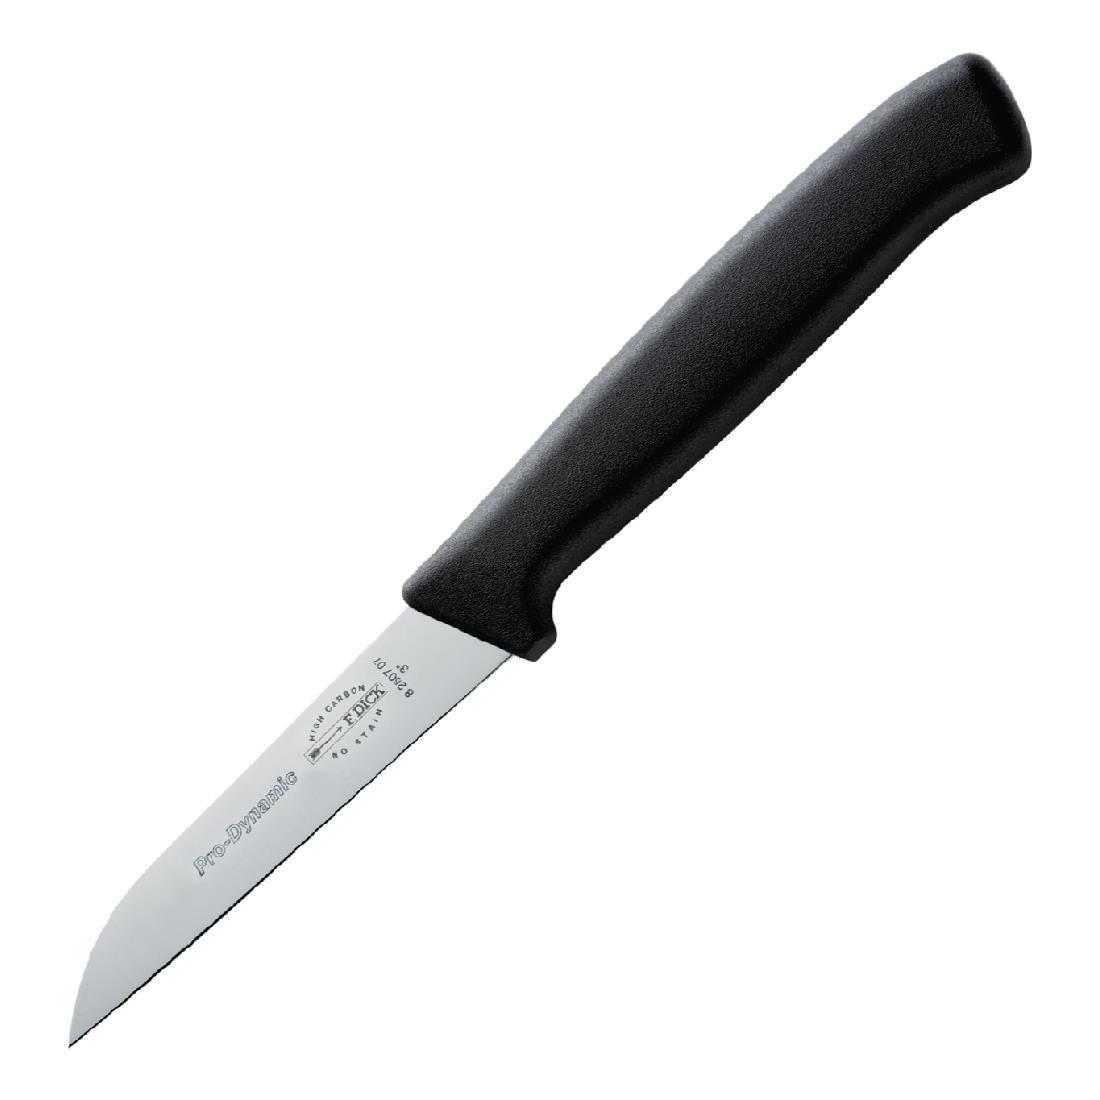 Dick Pro Dynamic 8 Piece Starter Knife Set With Roll Bag - DL385  - 6